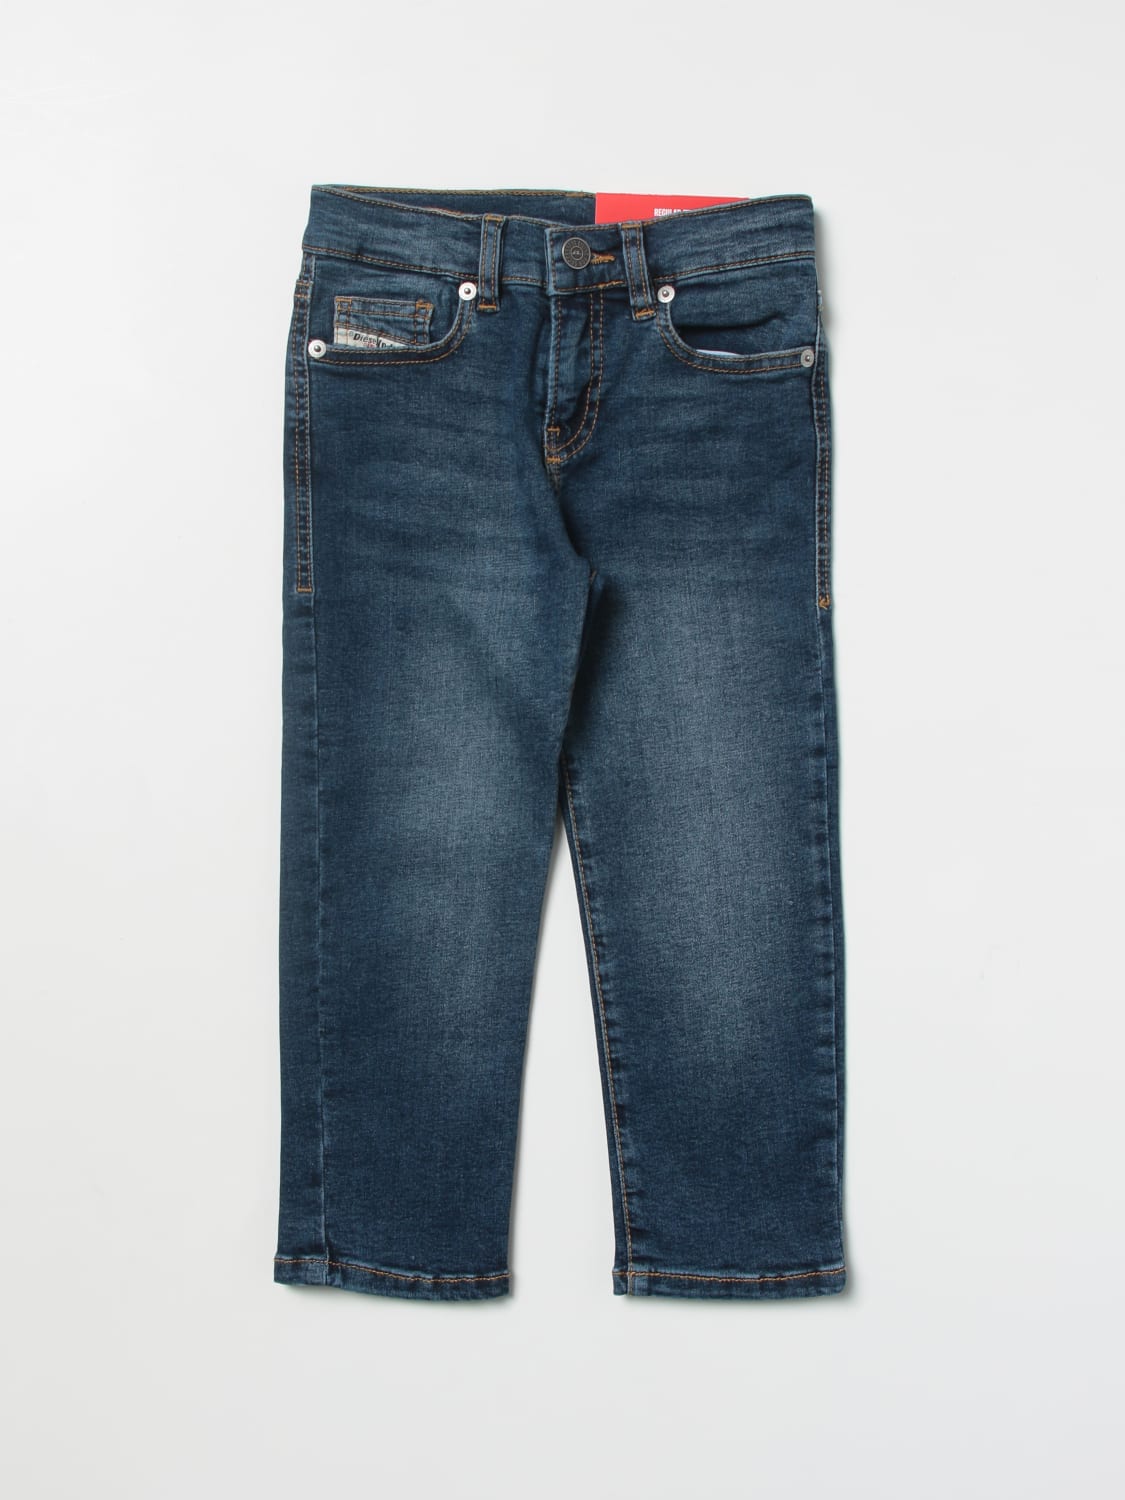 Diesel Outlet: jeans for boys - Denim Diesel jeans J00809KXBD1 online on GIGLIO.COM